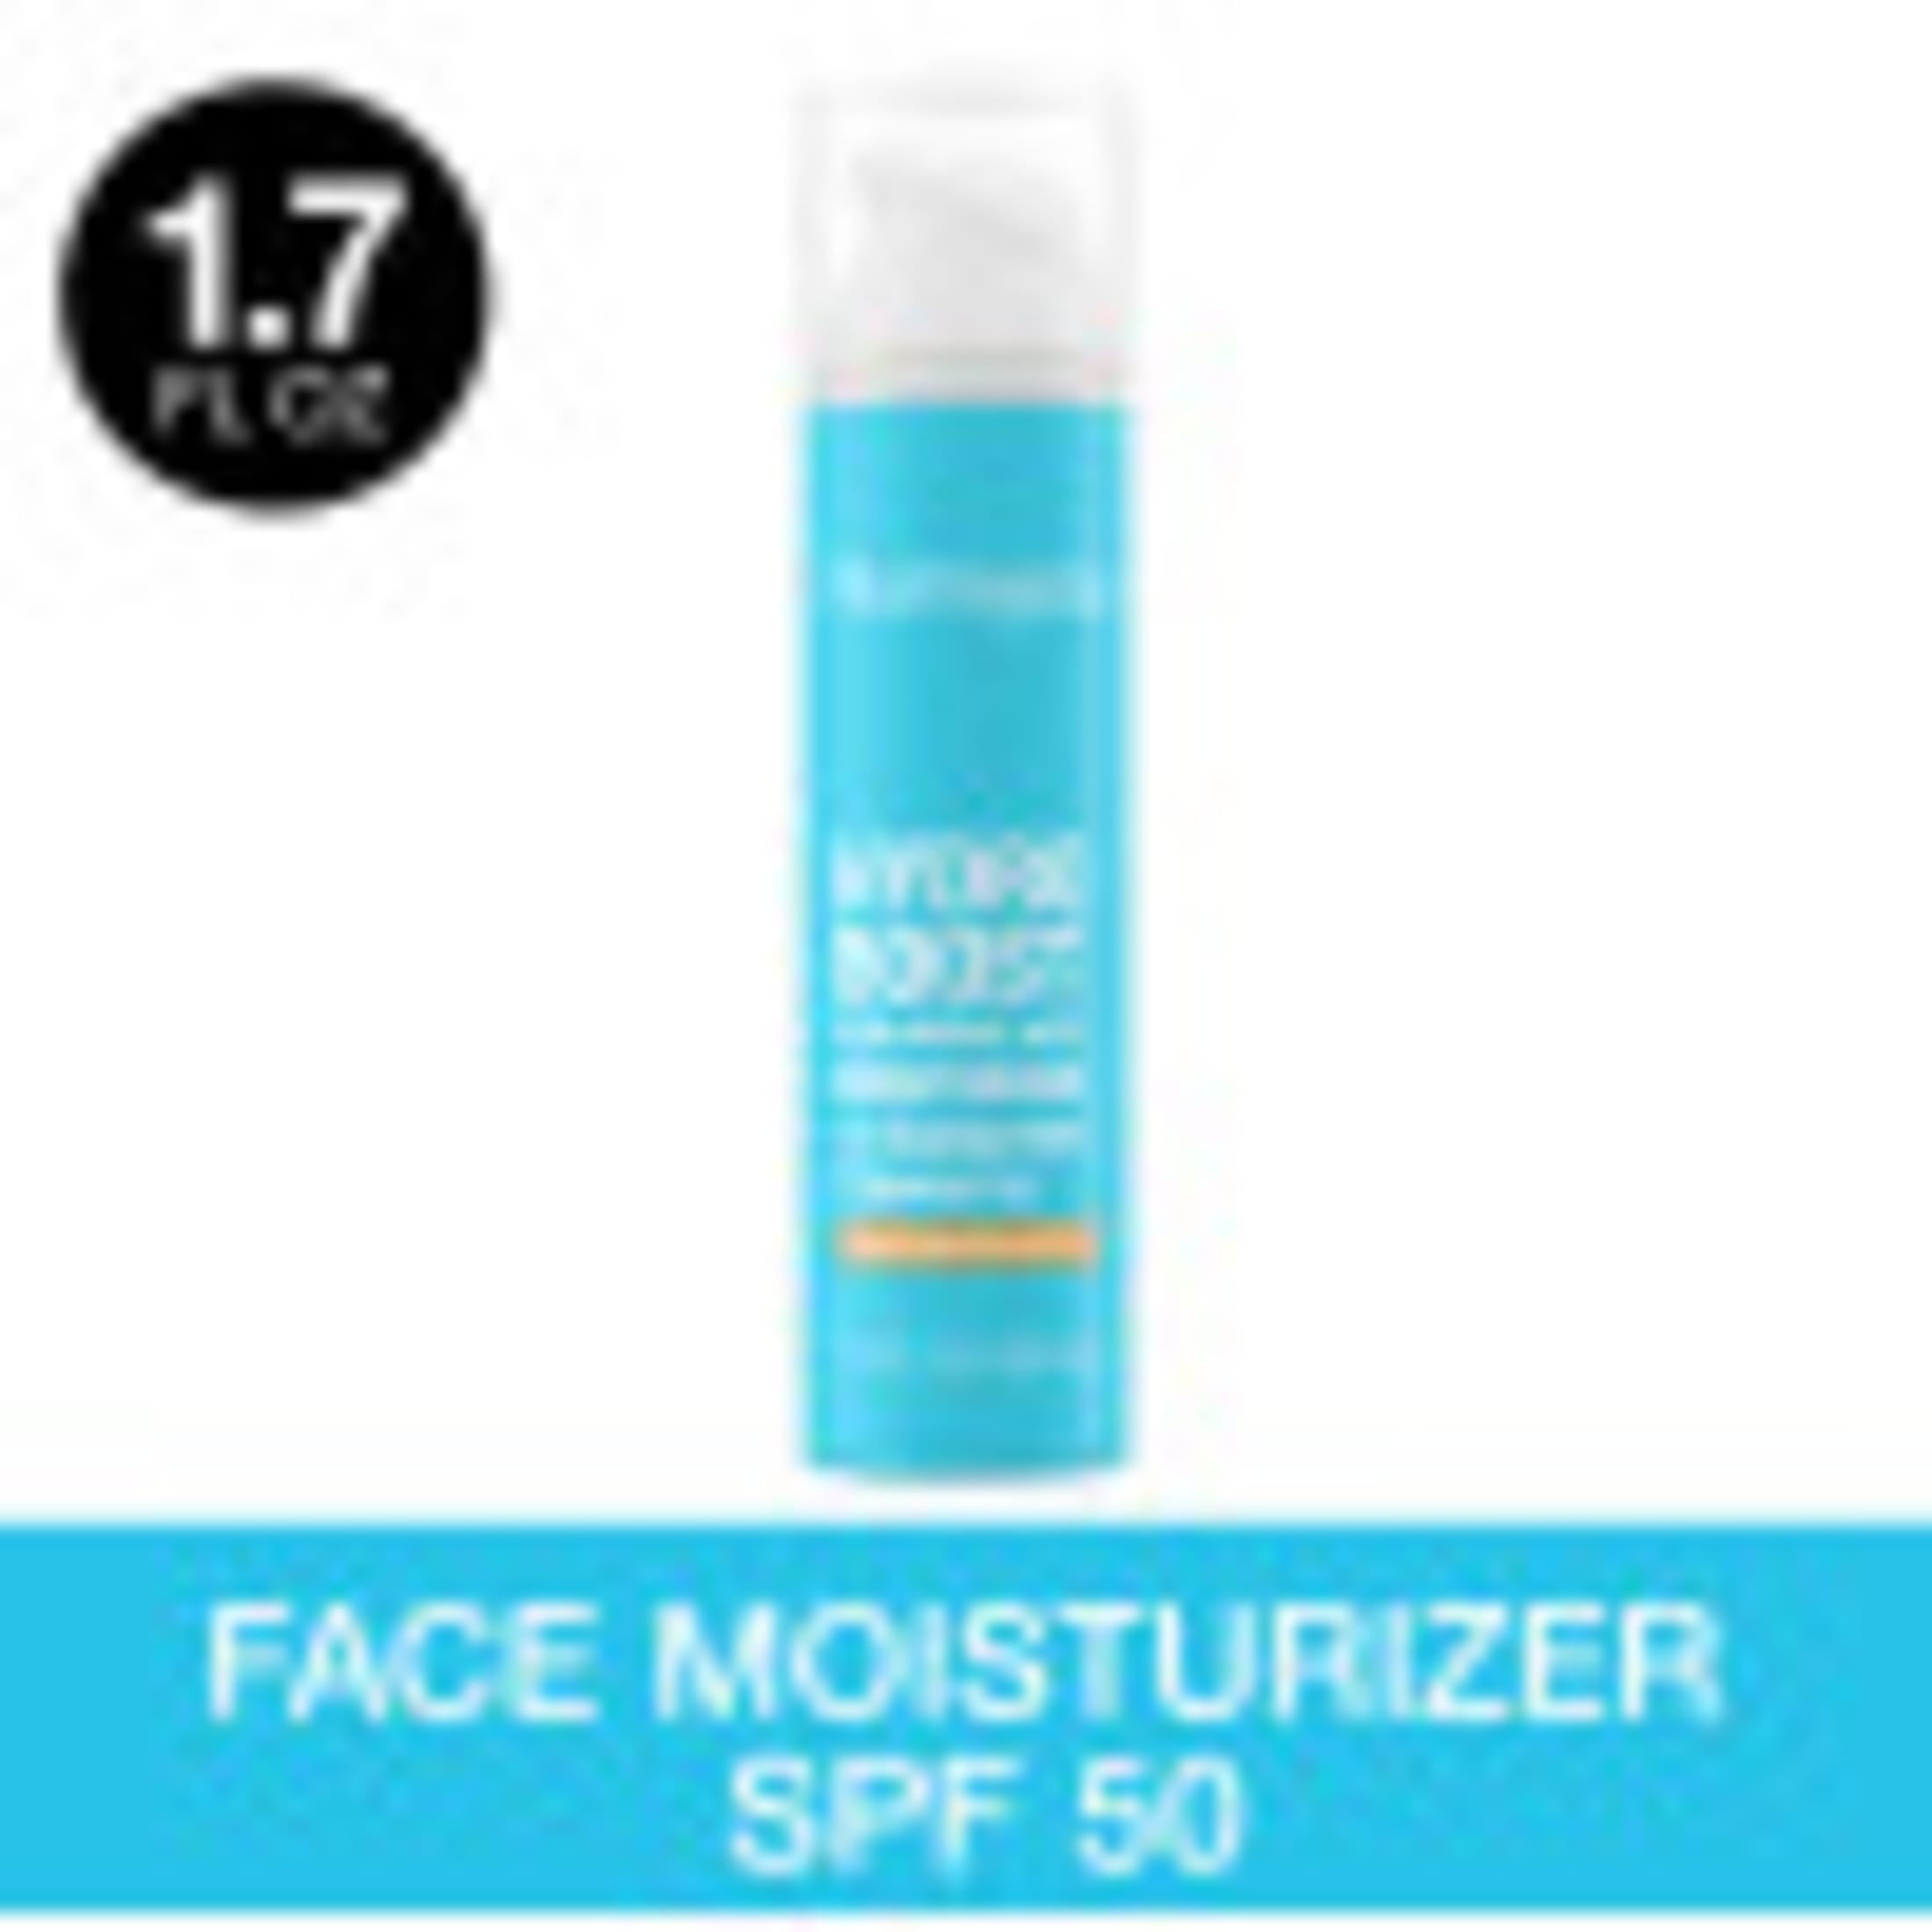 Neutrogena Hydro Boost Hyaluronic Acid SPF 50 Face Moisturizer Lotion, Skin Care, 1.7 oz